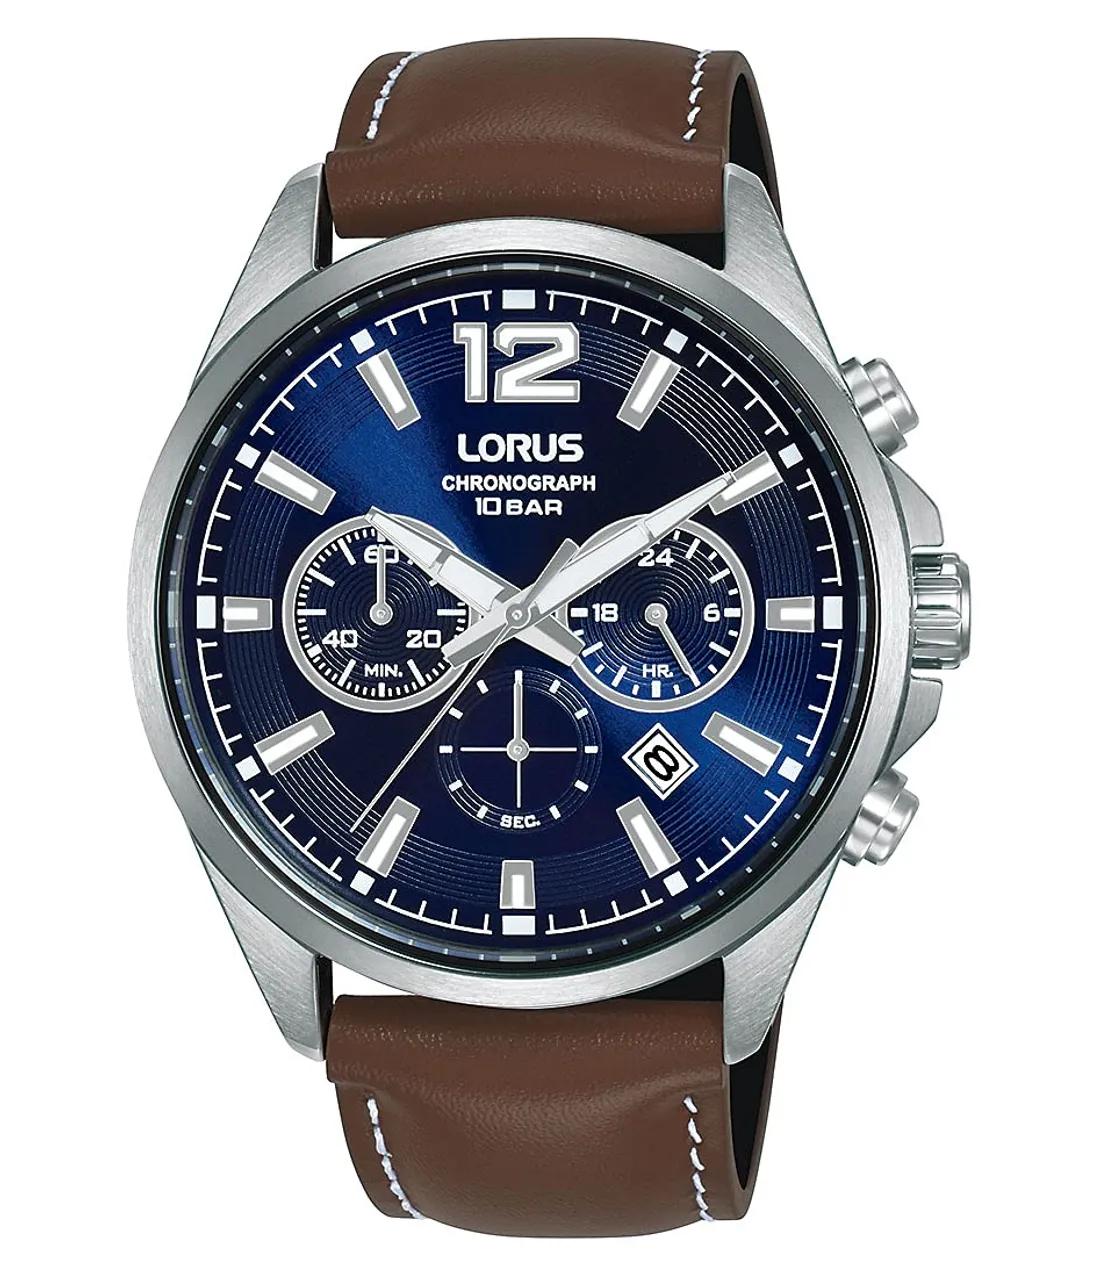 Lorus Herren Analog Quarz Uhr mit Leder Armband RT387JX9